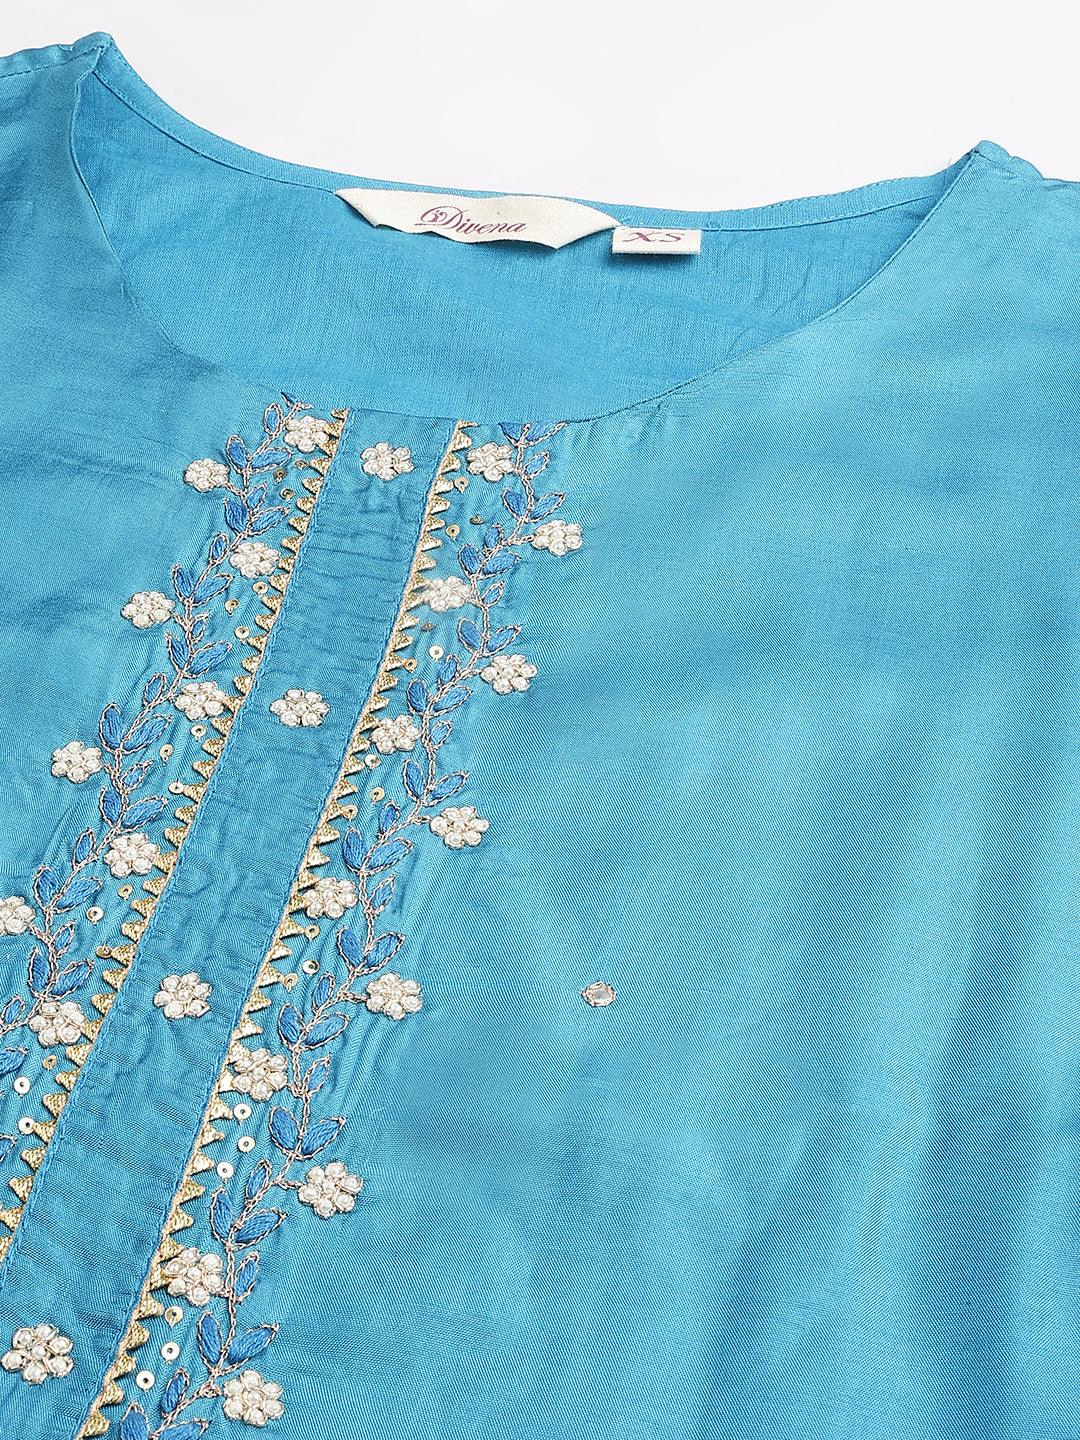 Divena Teal Blue Muslin Embroidery Kurta pant Set with Organza Dupatta - divena world